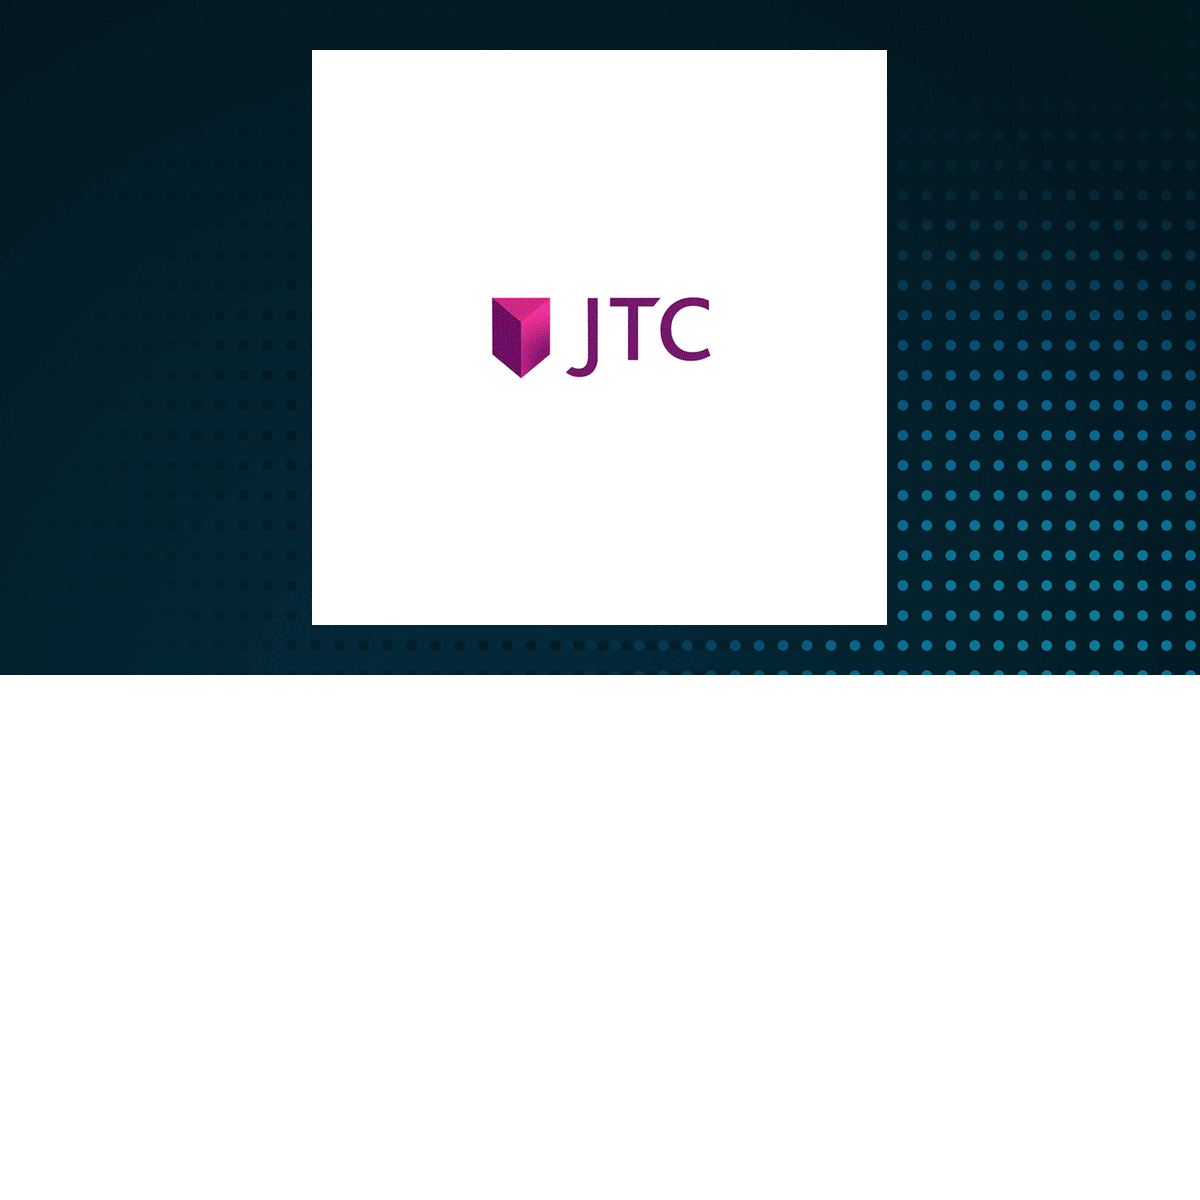 JTC logo